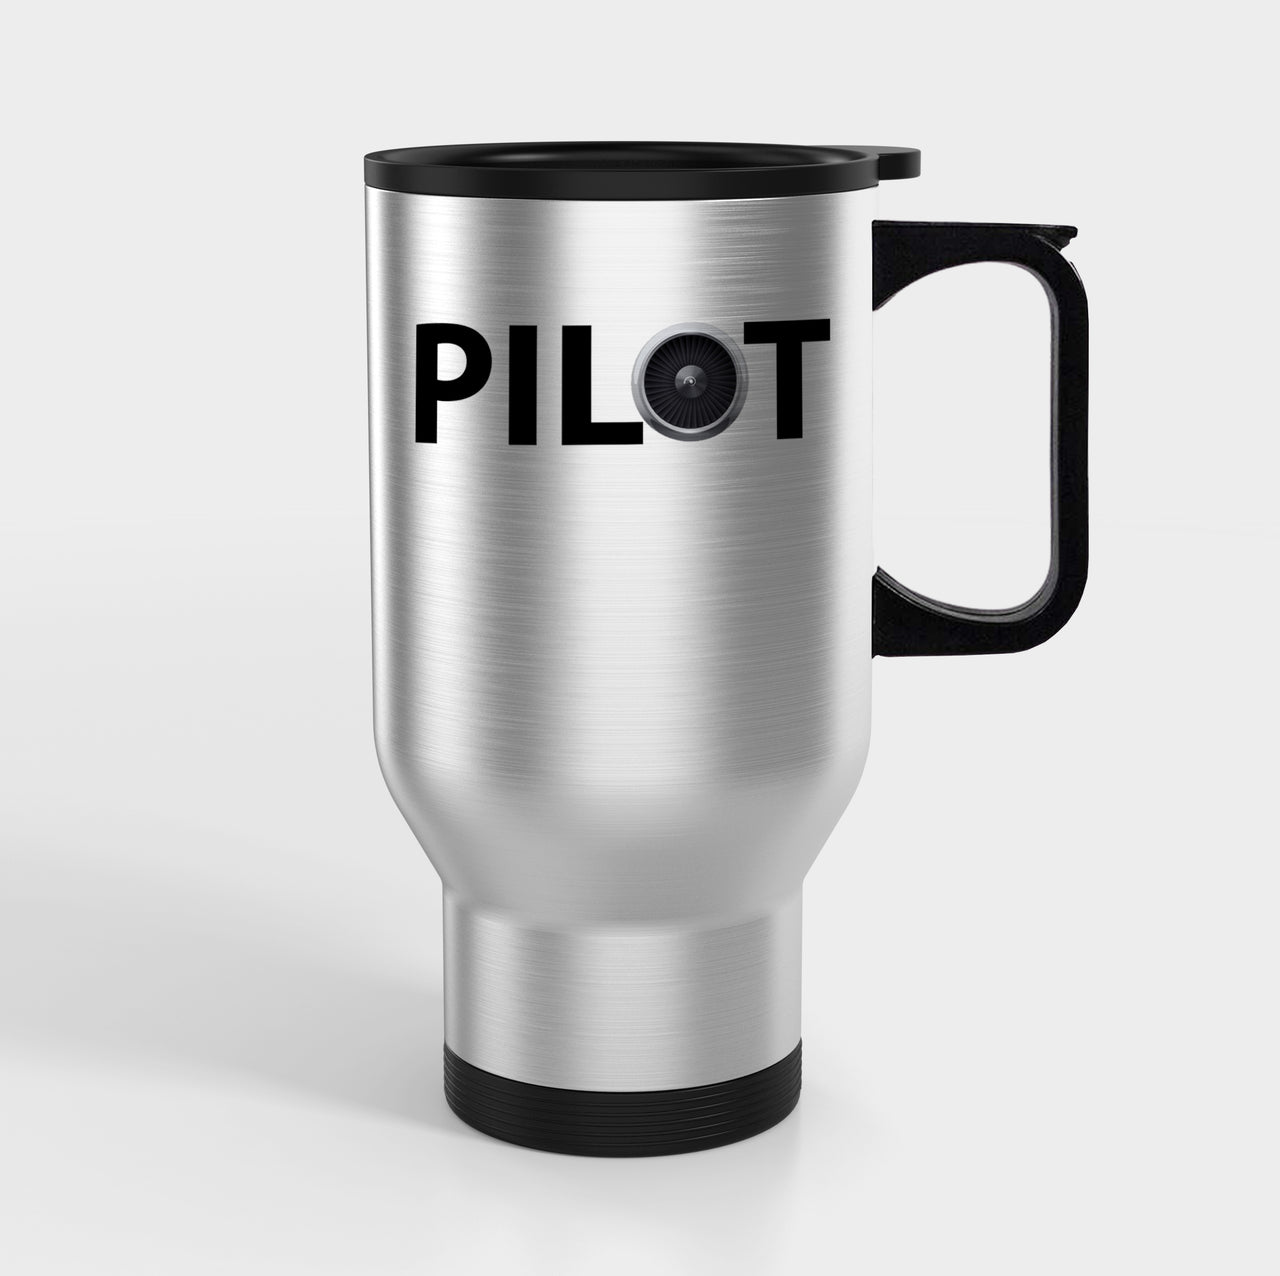 Pilot & Jet Engine Designed Travel Mugs (With Holder)